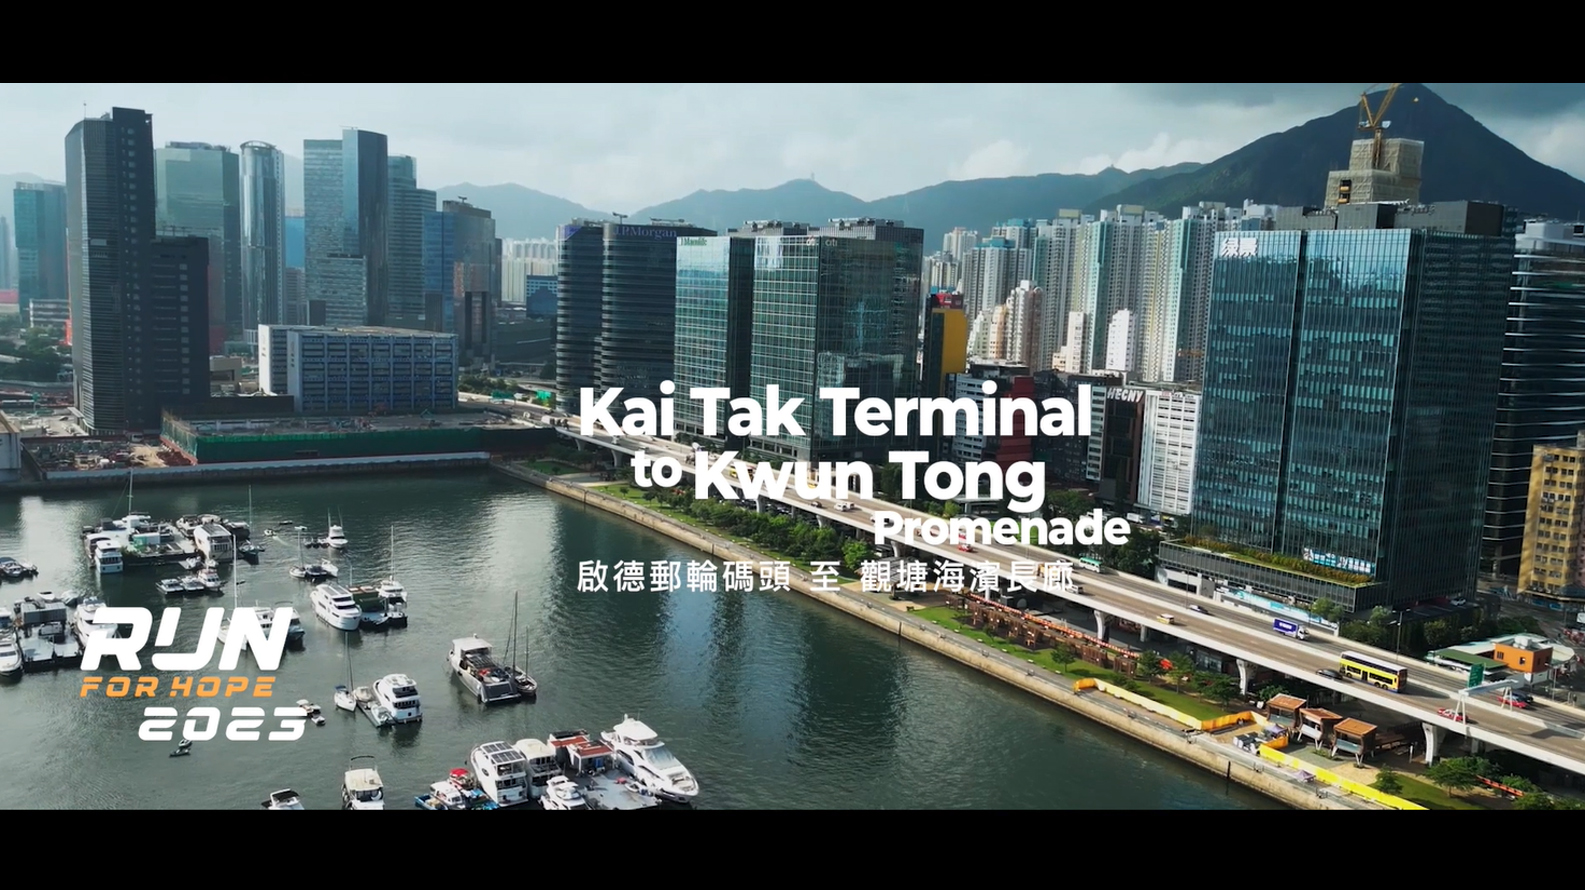 Kai Tak Terminal to Kwun Tong Promenade